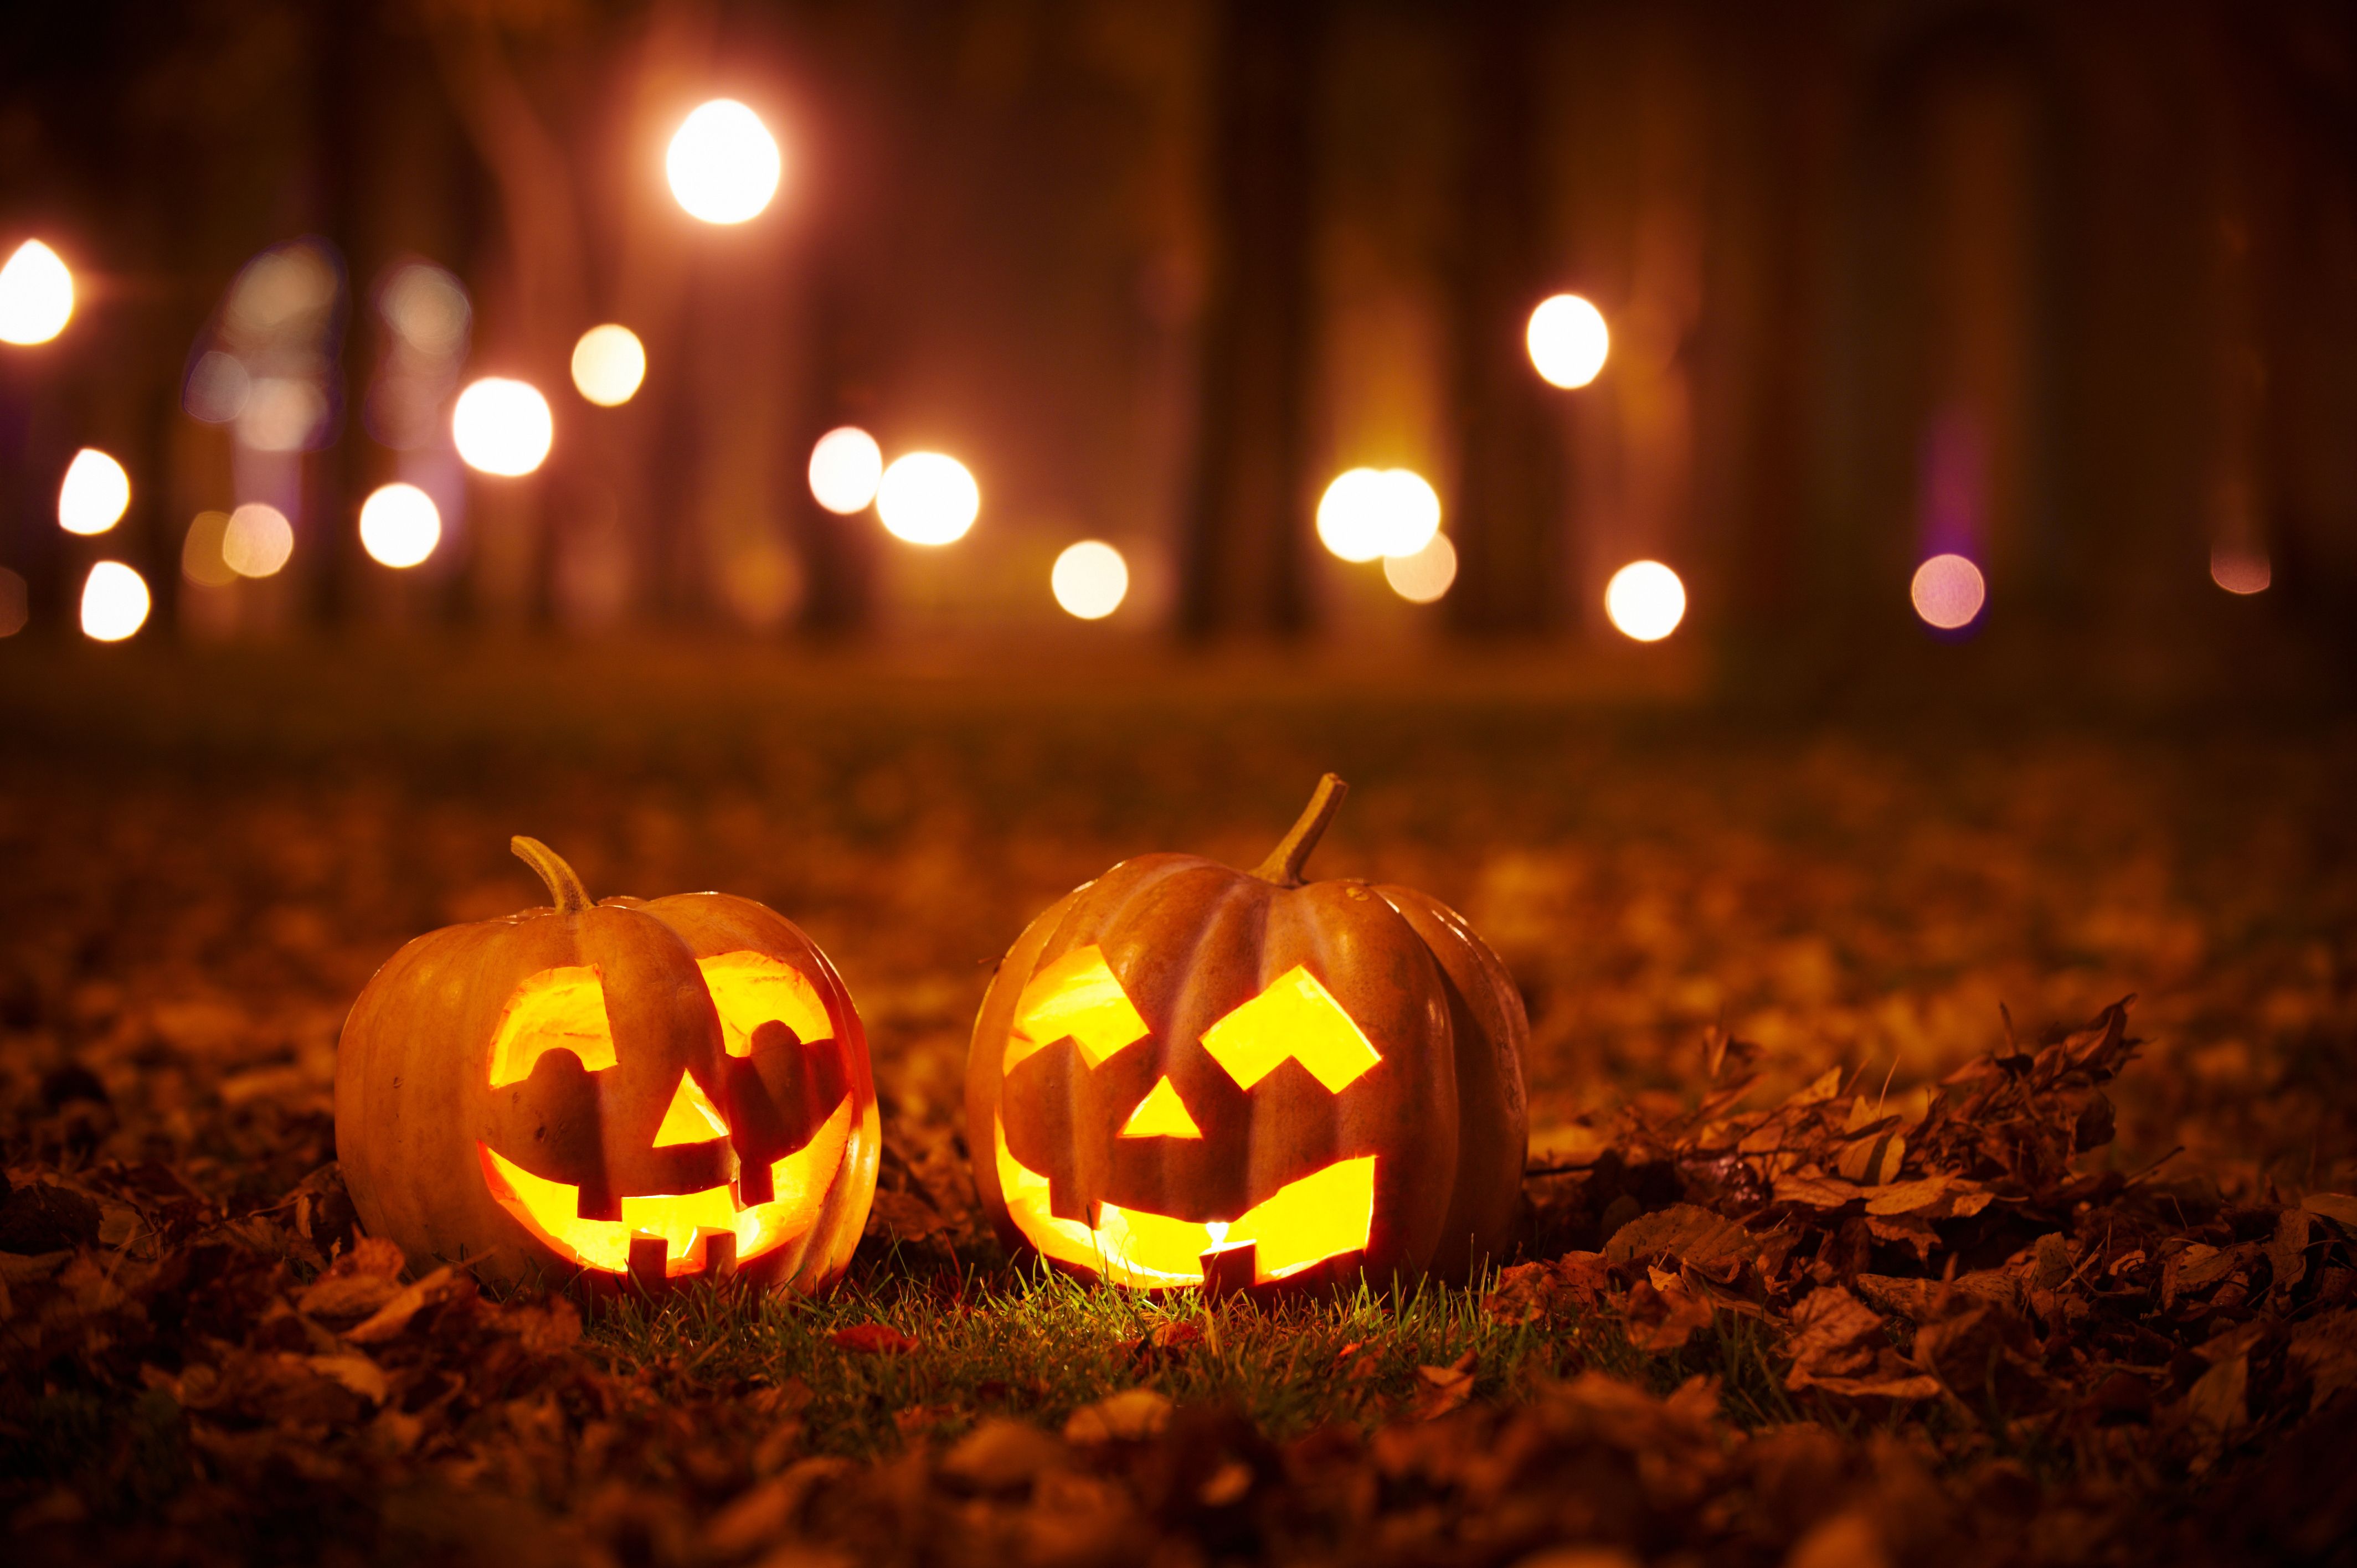 image of two jack-o-lanterns on fall leaves.